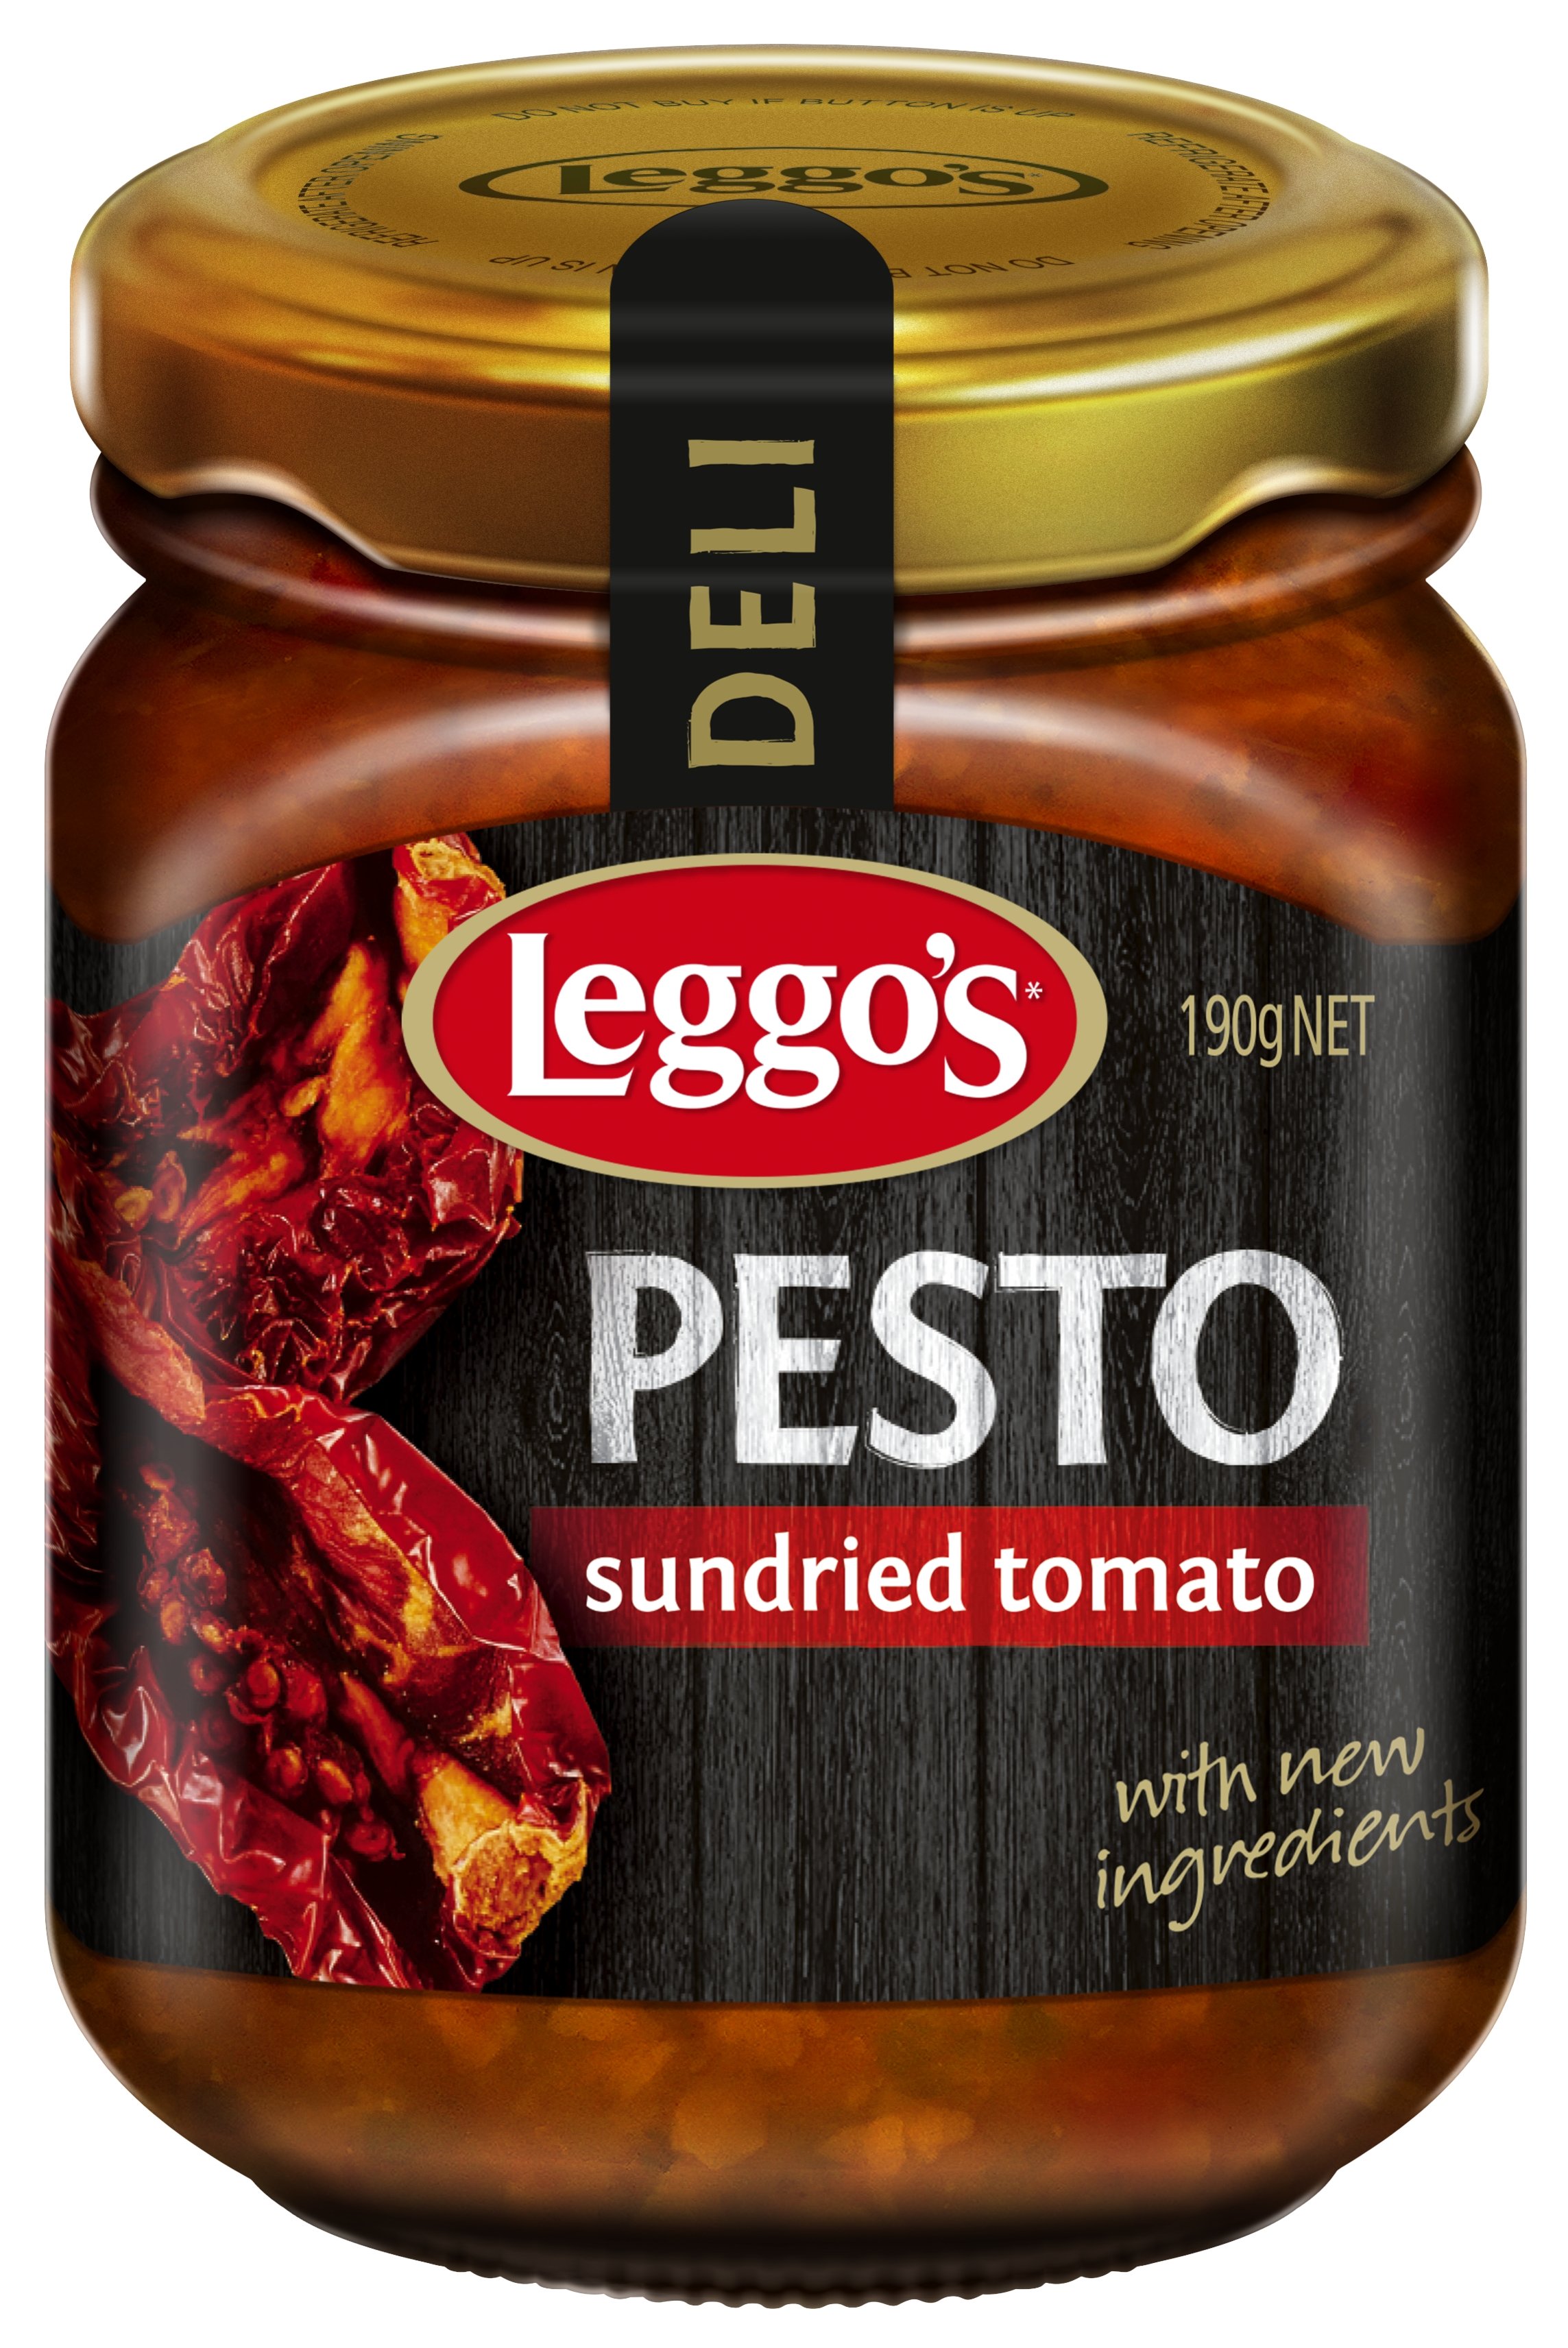 Photo of Leggos Pesto Sundried Tomato in glass jar.